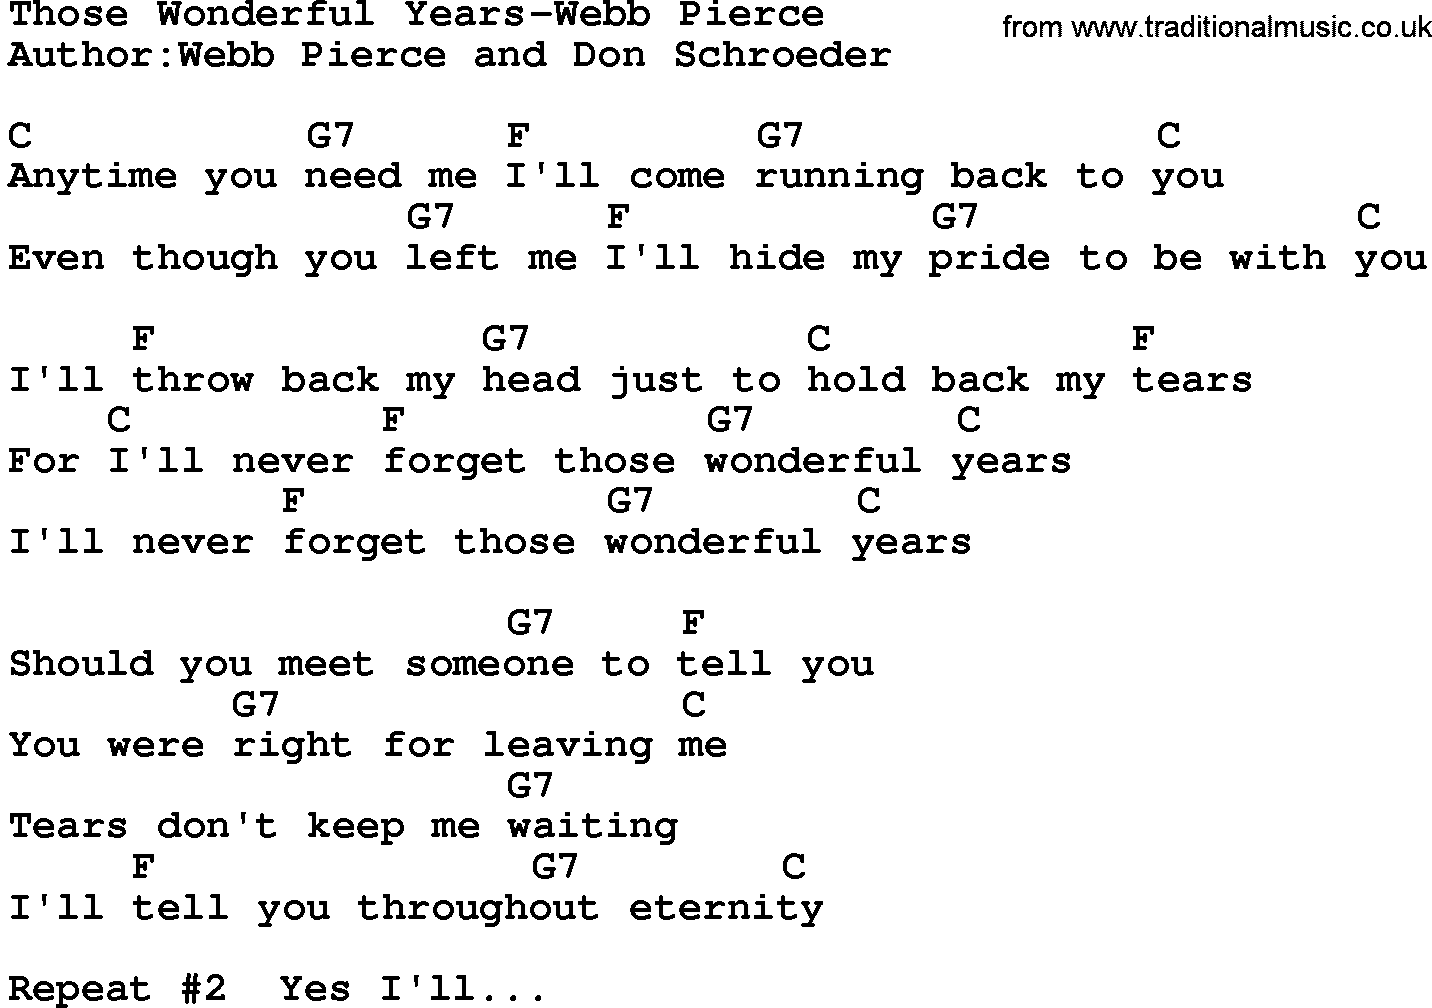 Country music song: Those Wonderful Years-Webb Pierce lyrics and chords